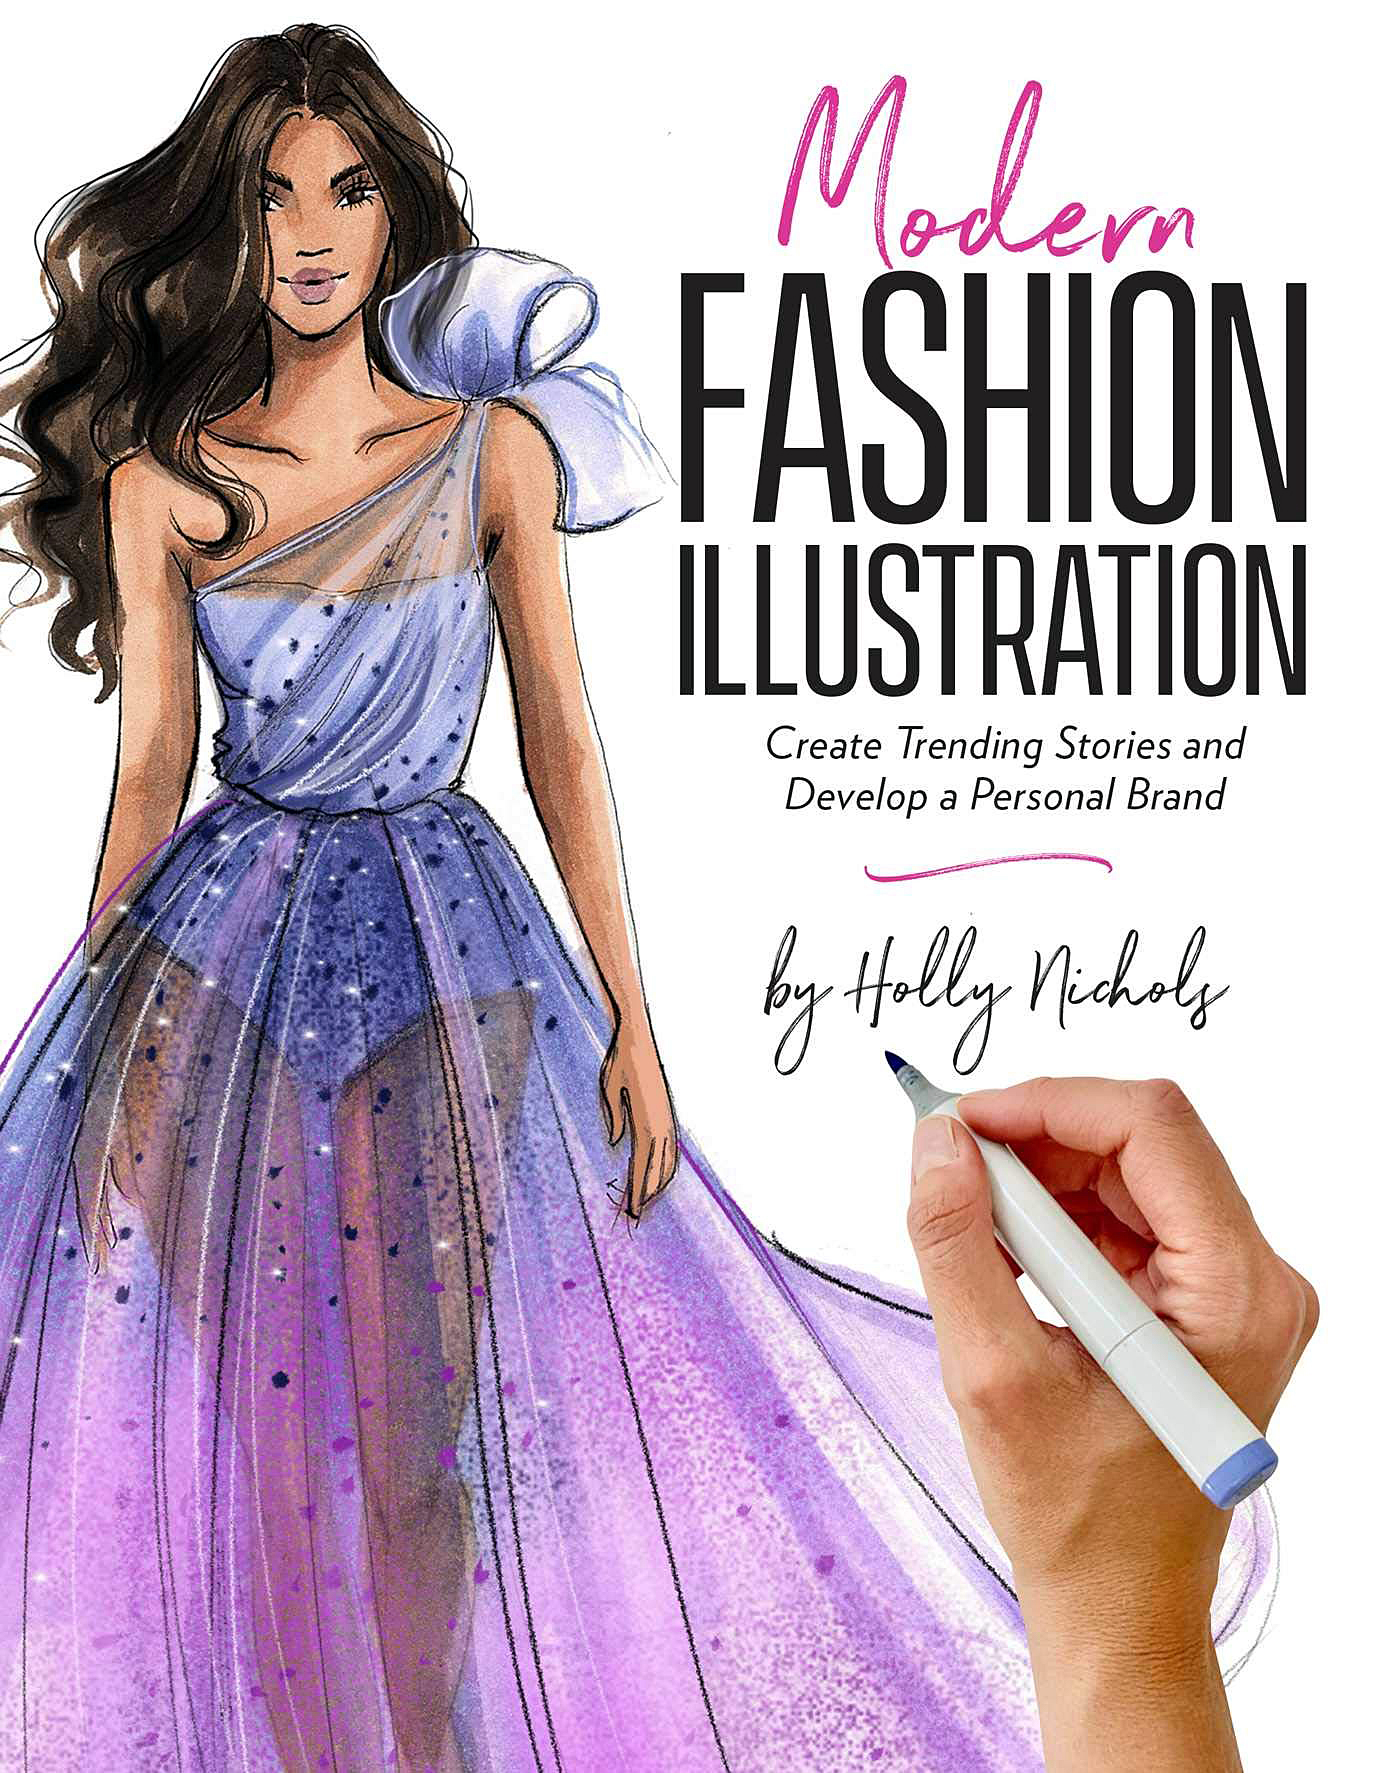 fashion design sketches book mod apk